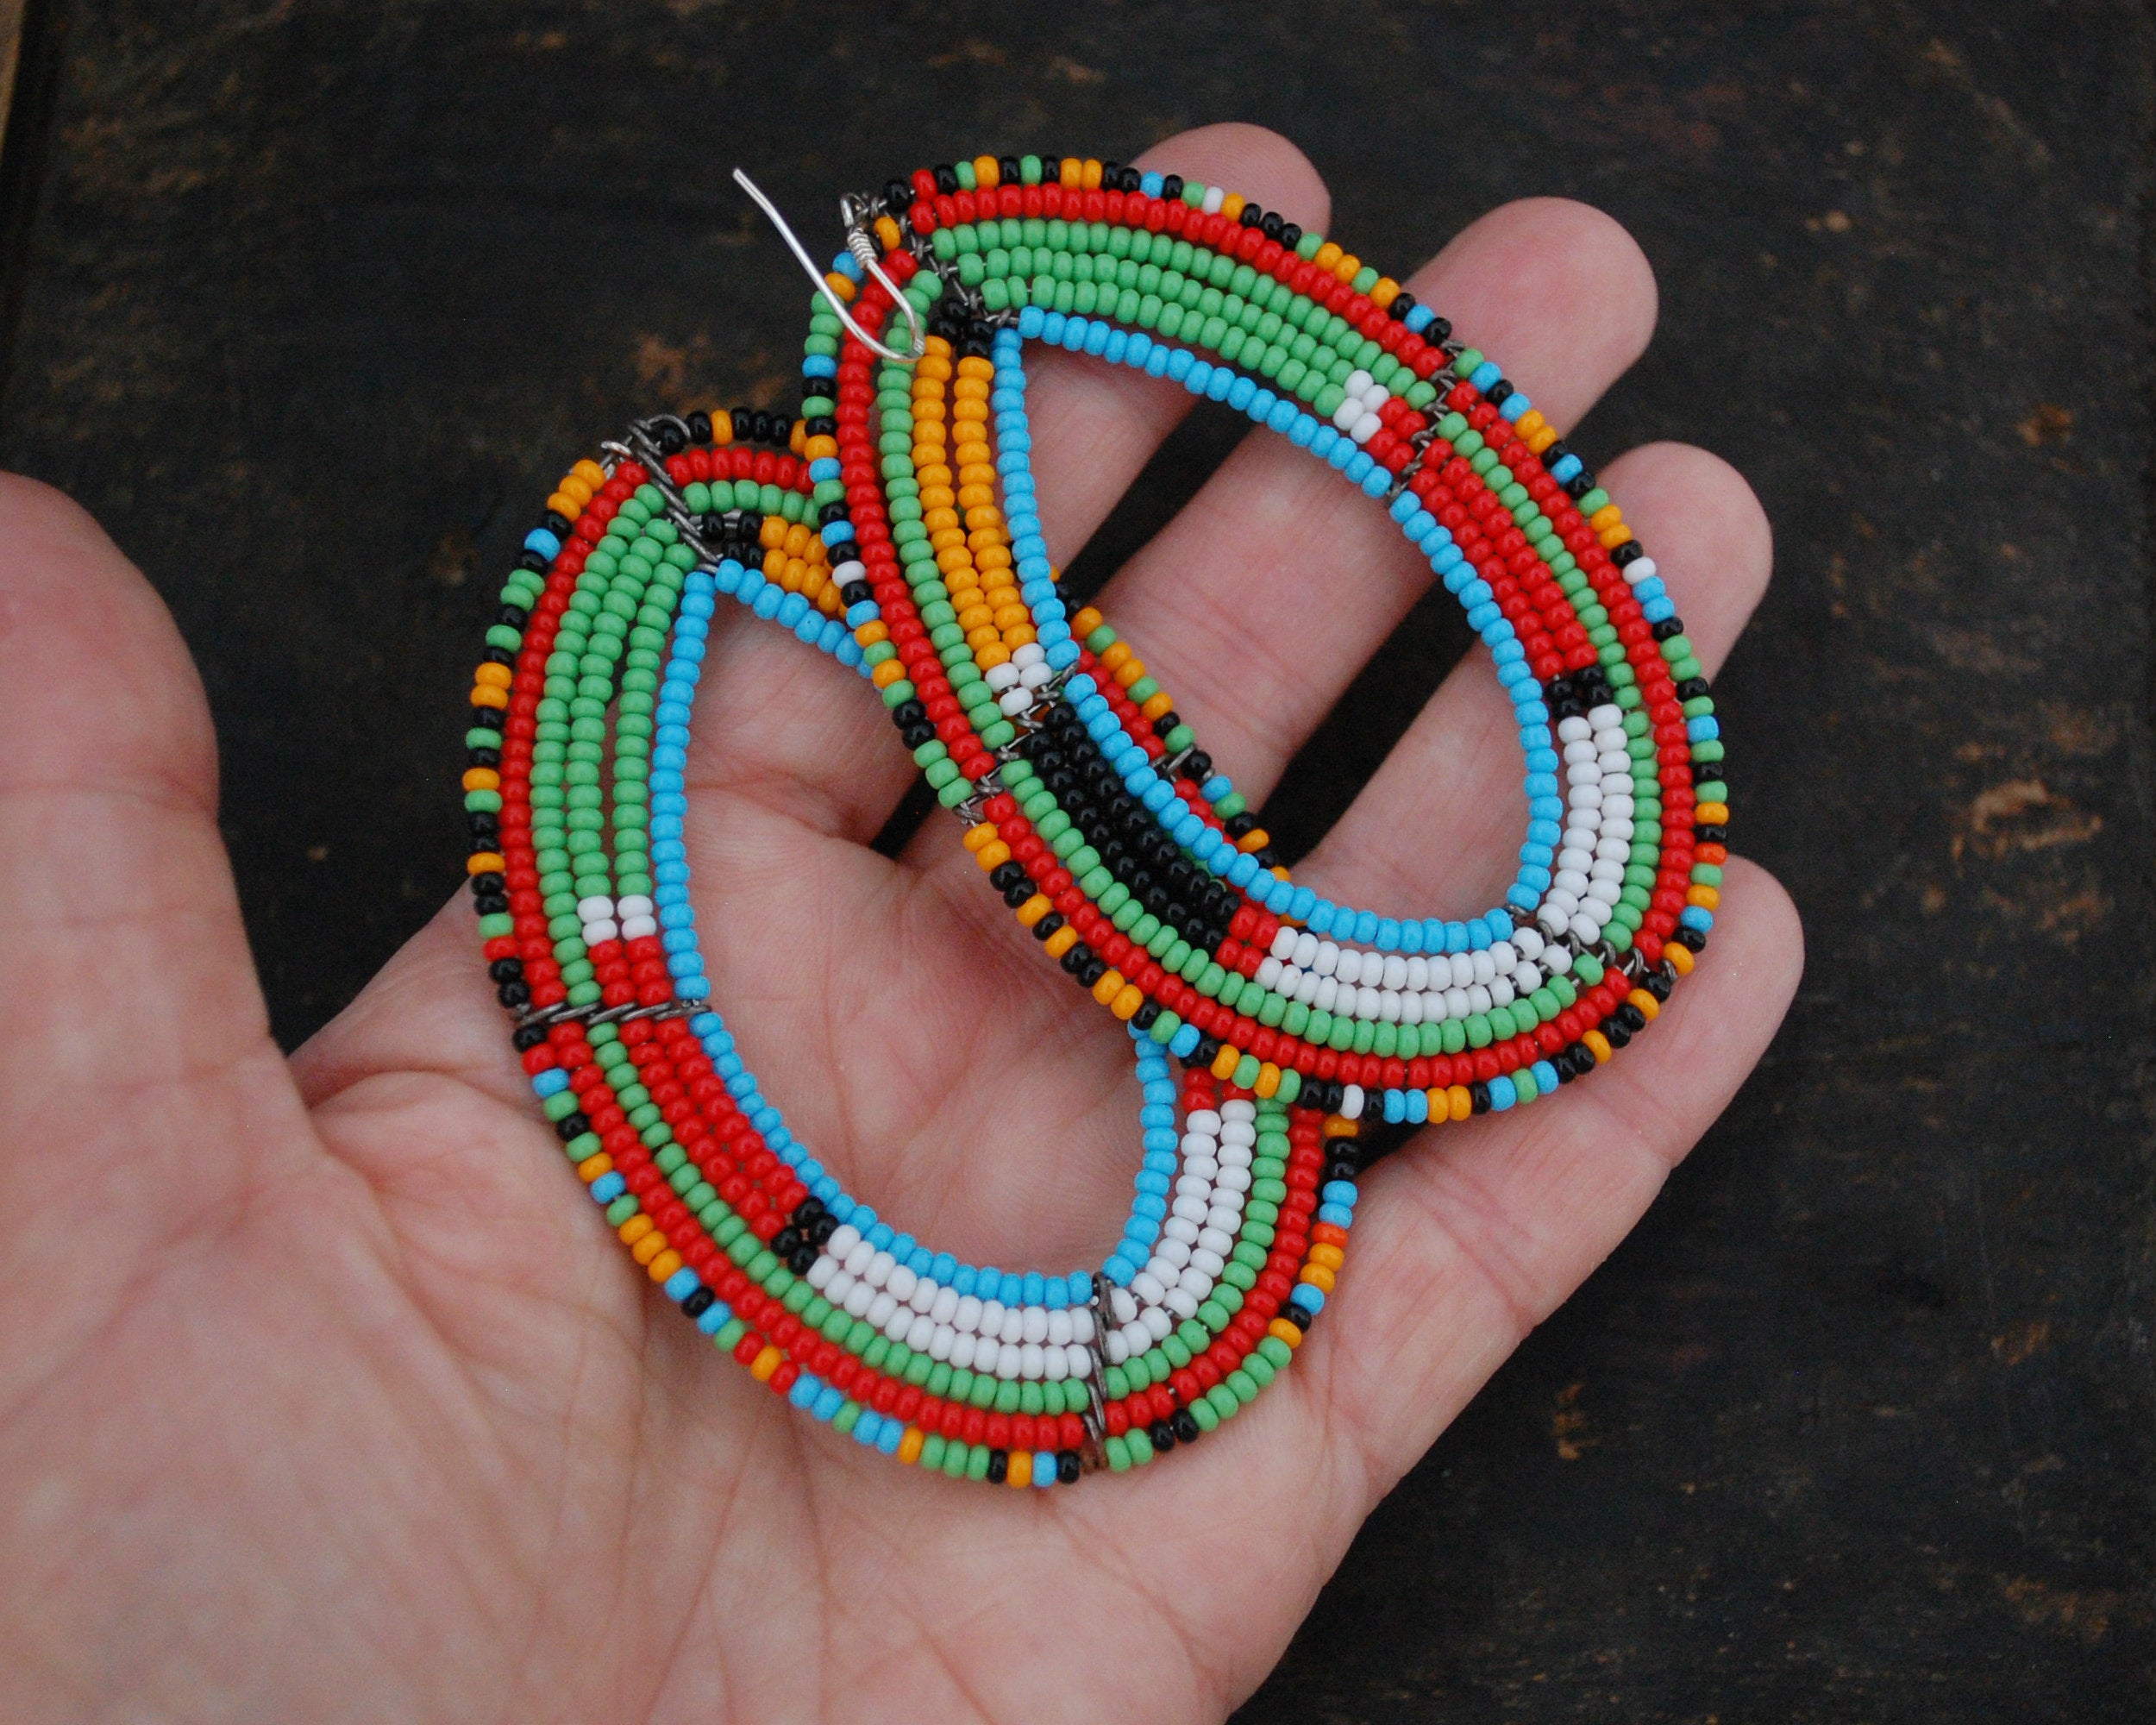 Large African Masaai Earrings